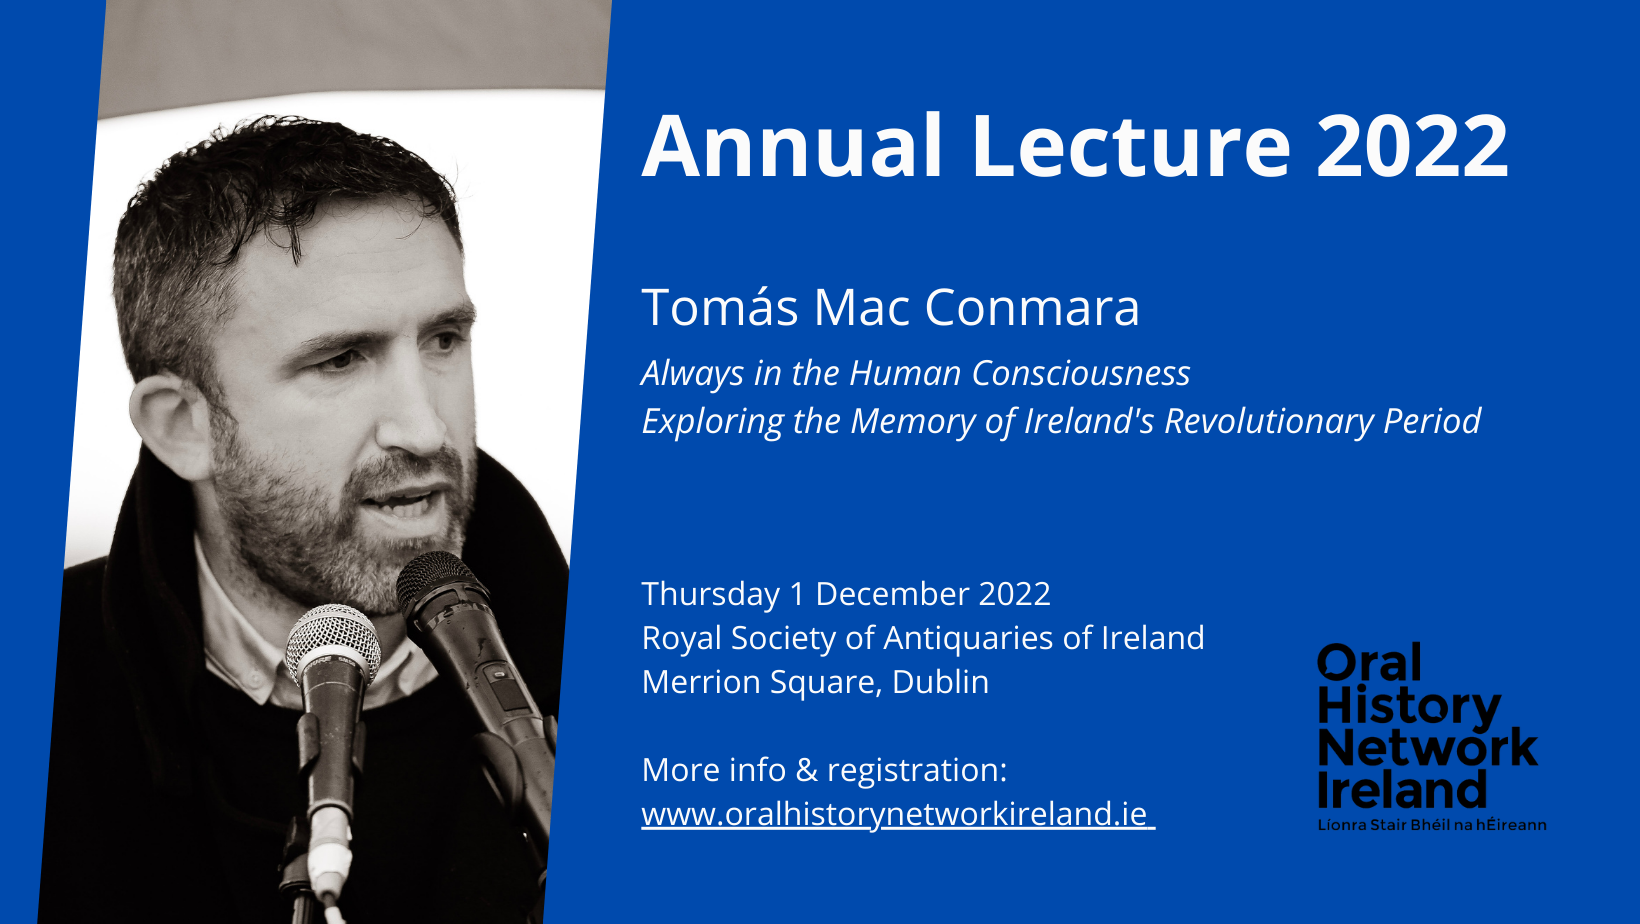 Annual Lecture 2022 - Tomas Mac Conmara